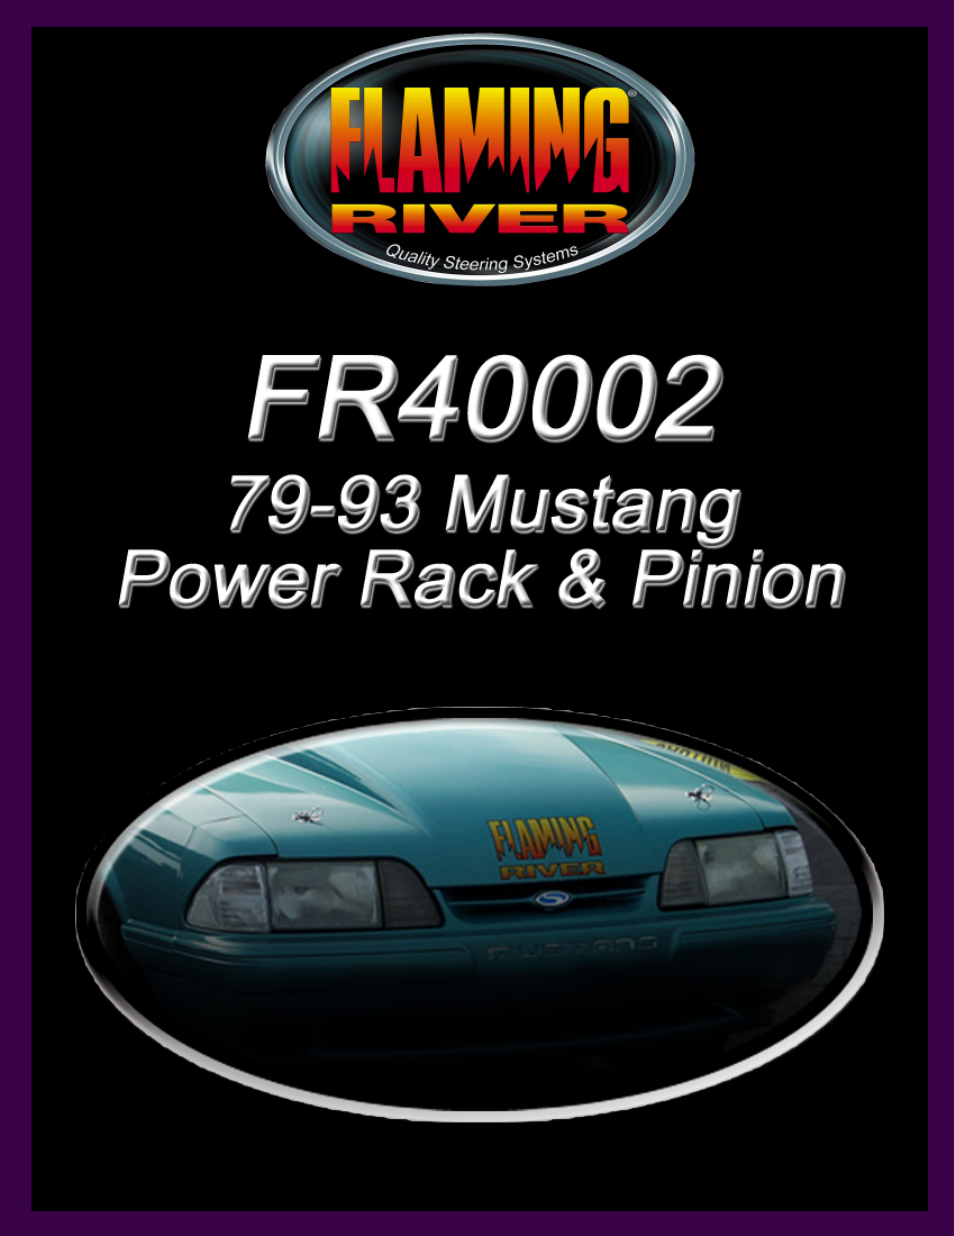 Power Rack & Pinion Mustang 1979-93